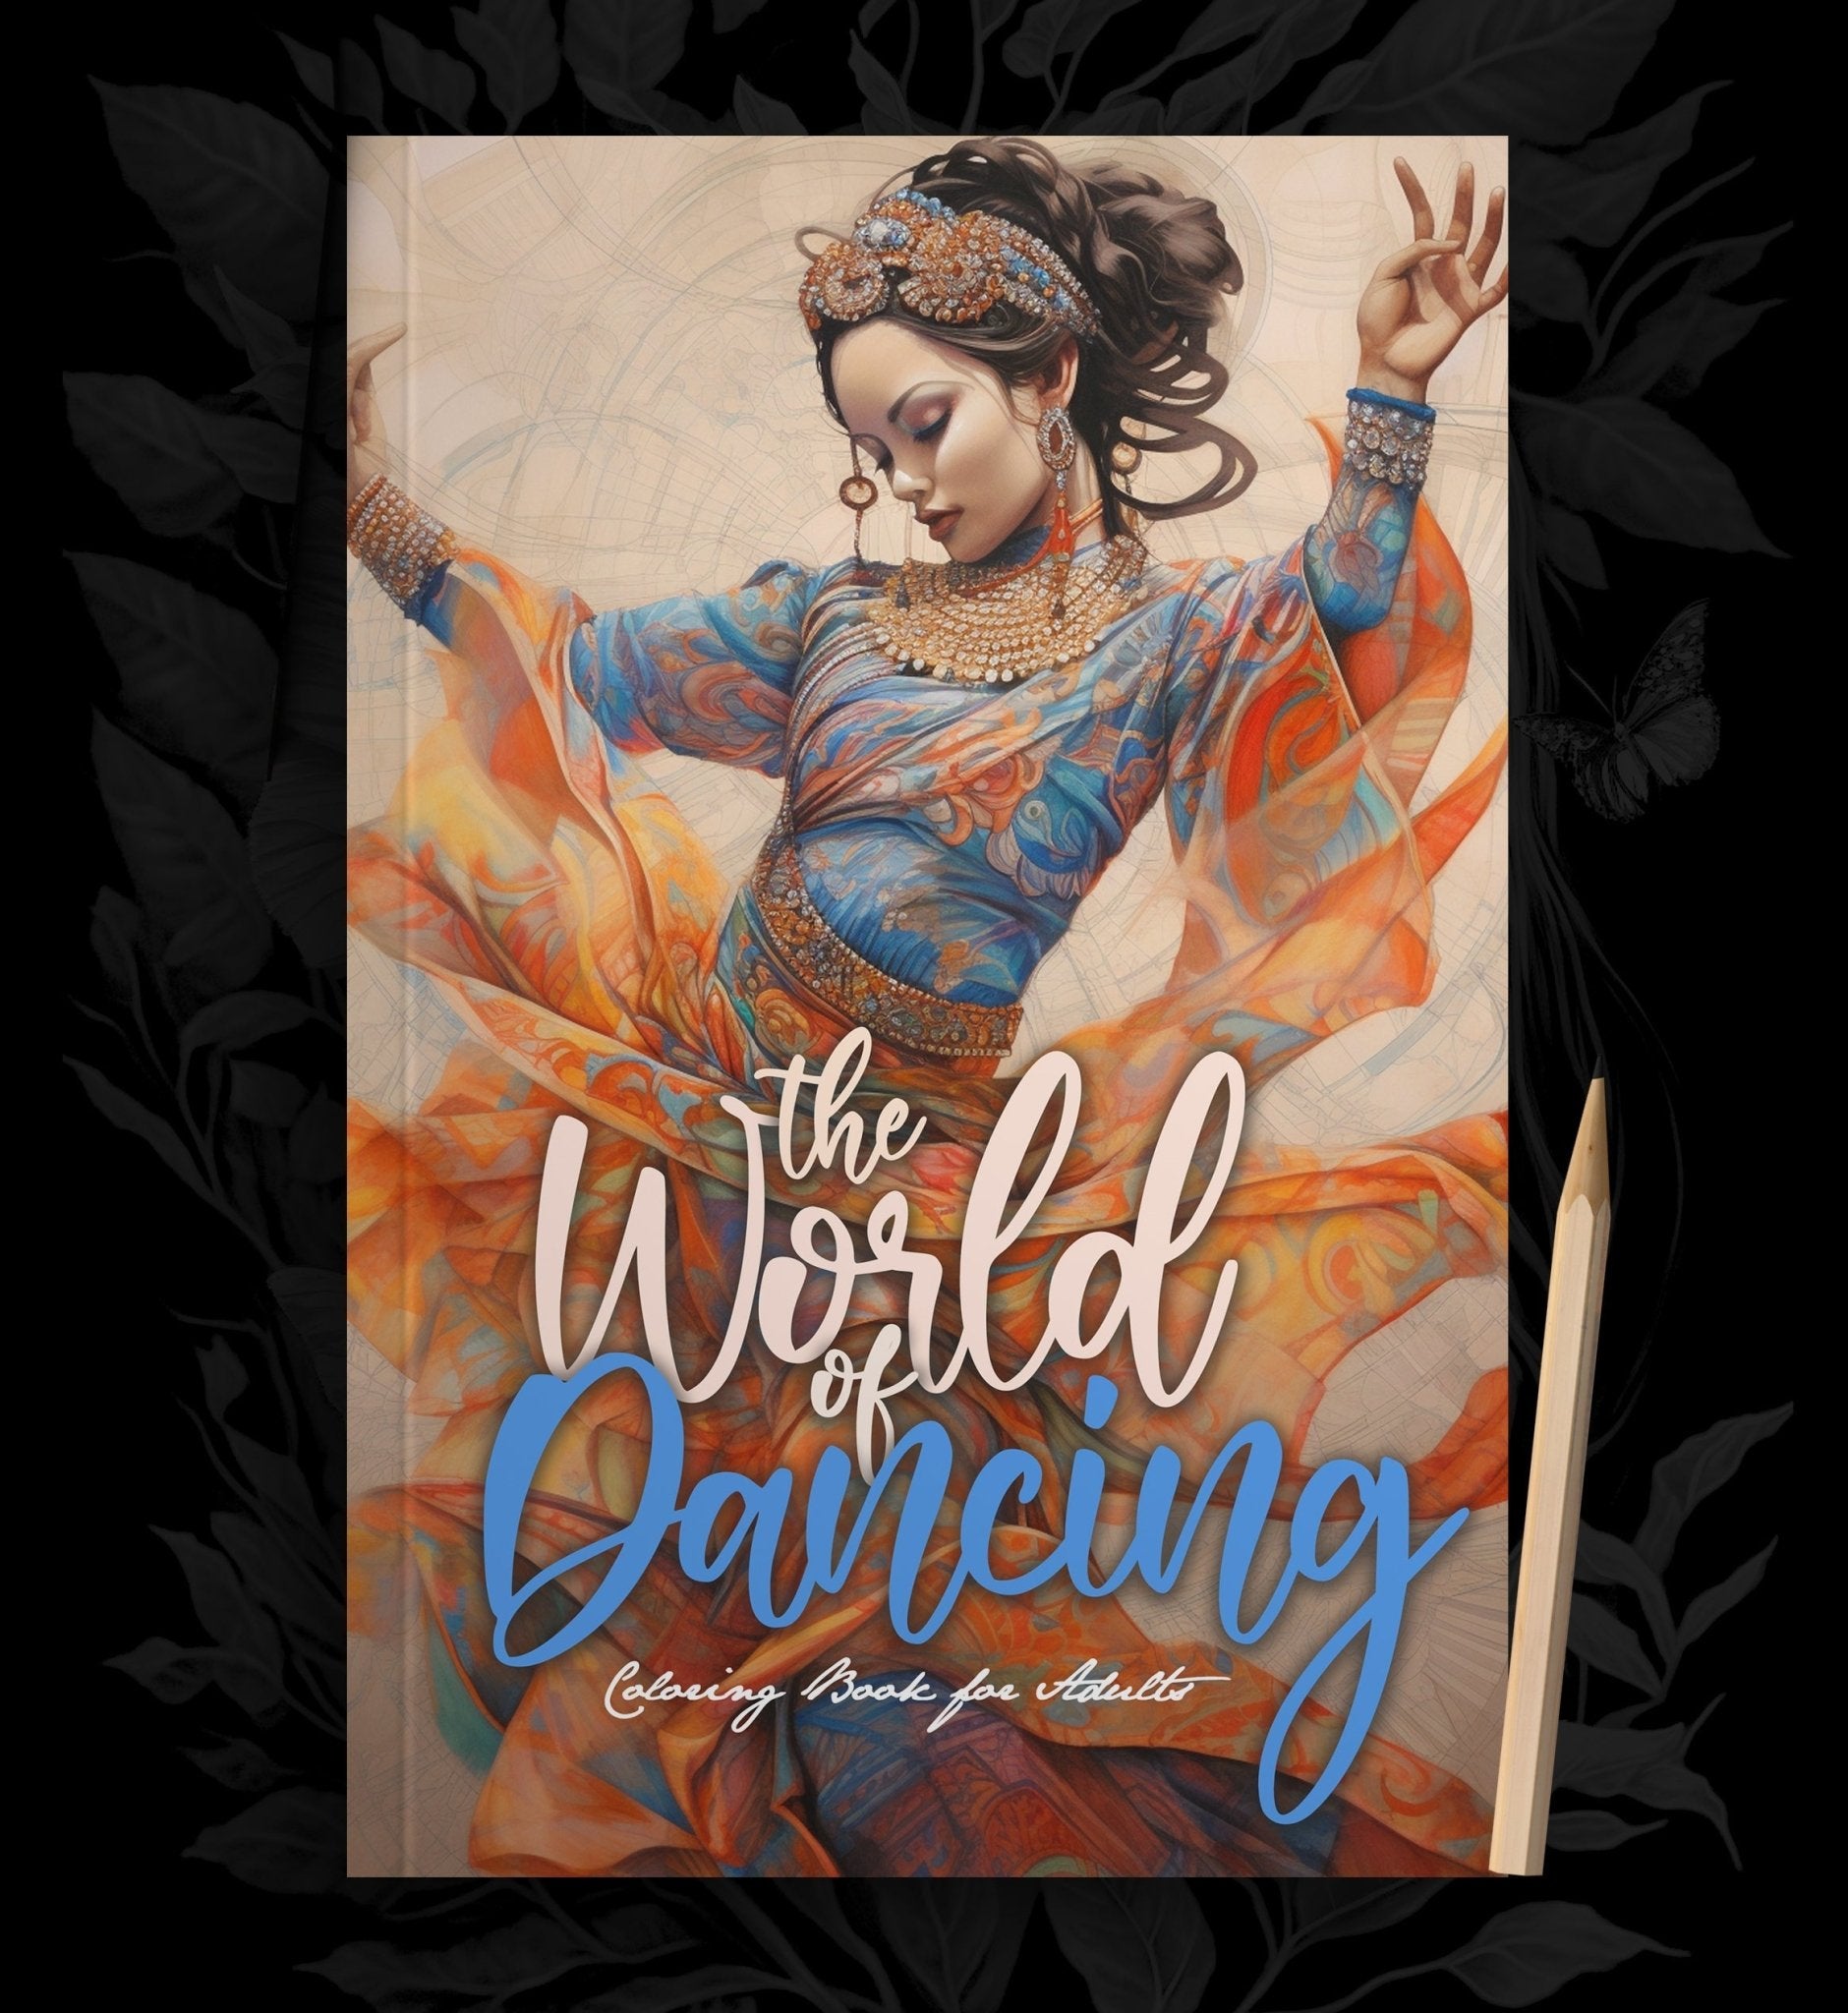 The World of Dancing Coloring Book (Digital) - Monsoon Publishing USA